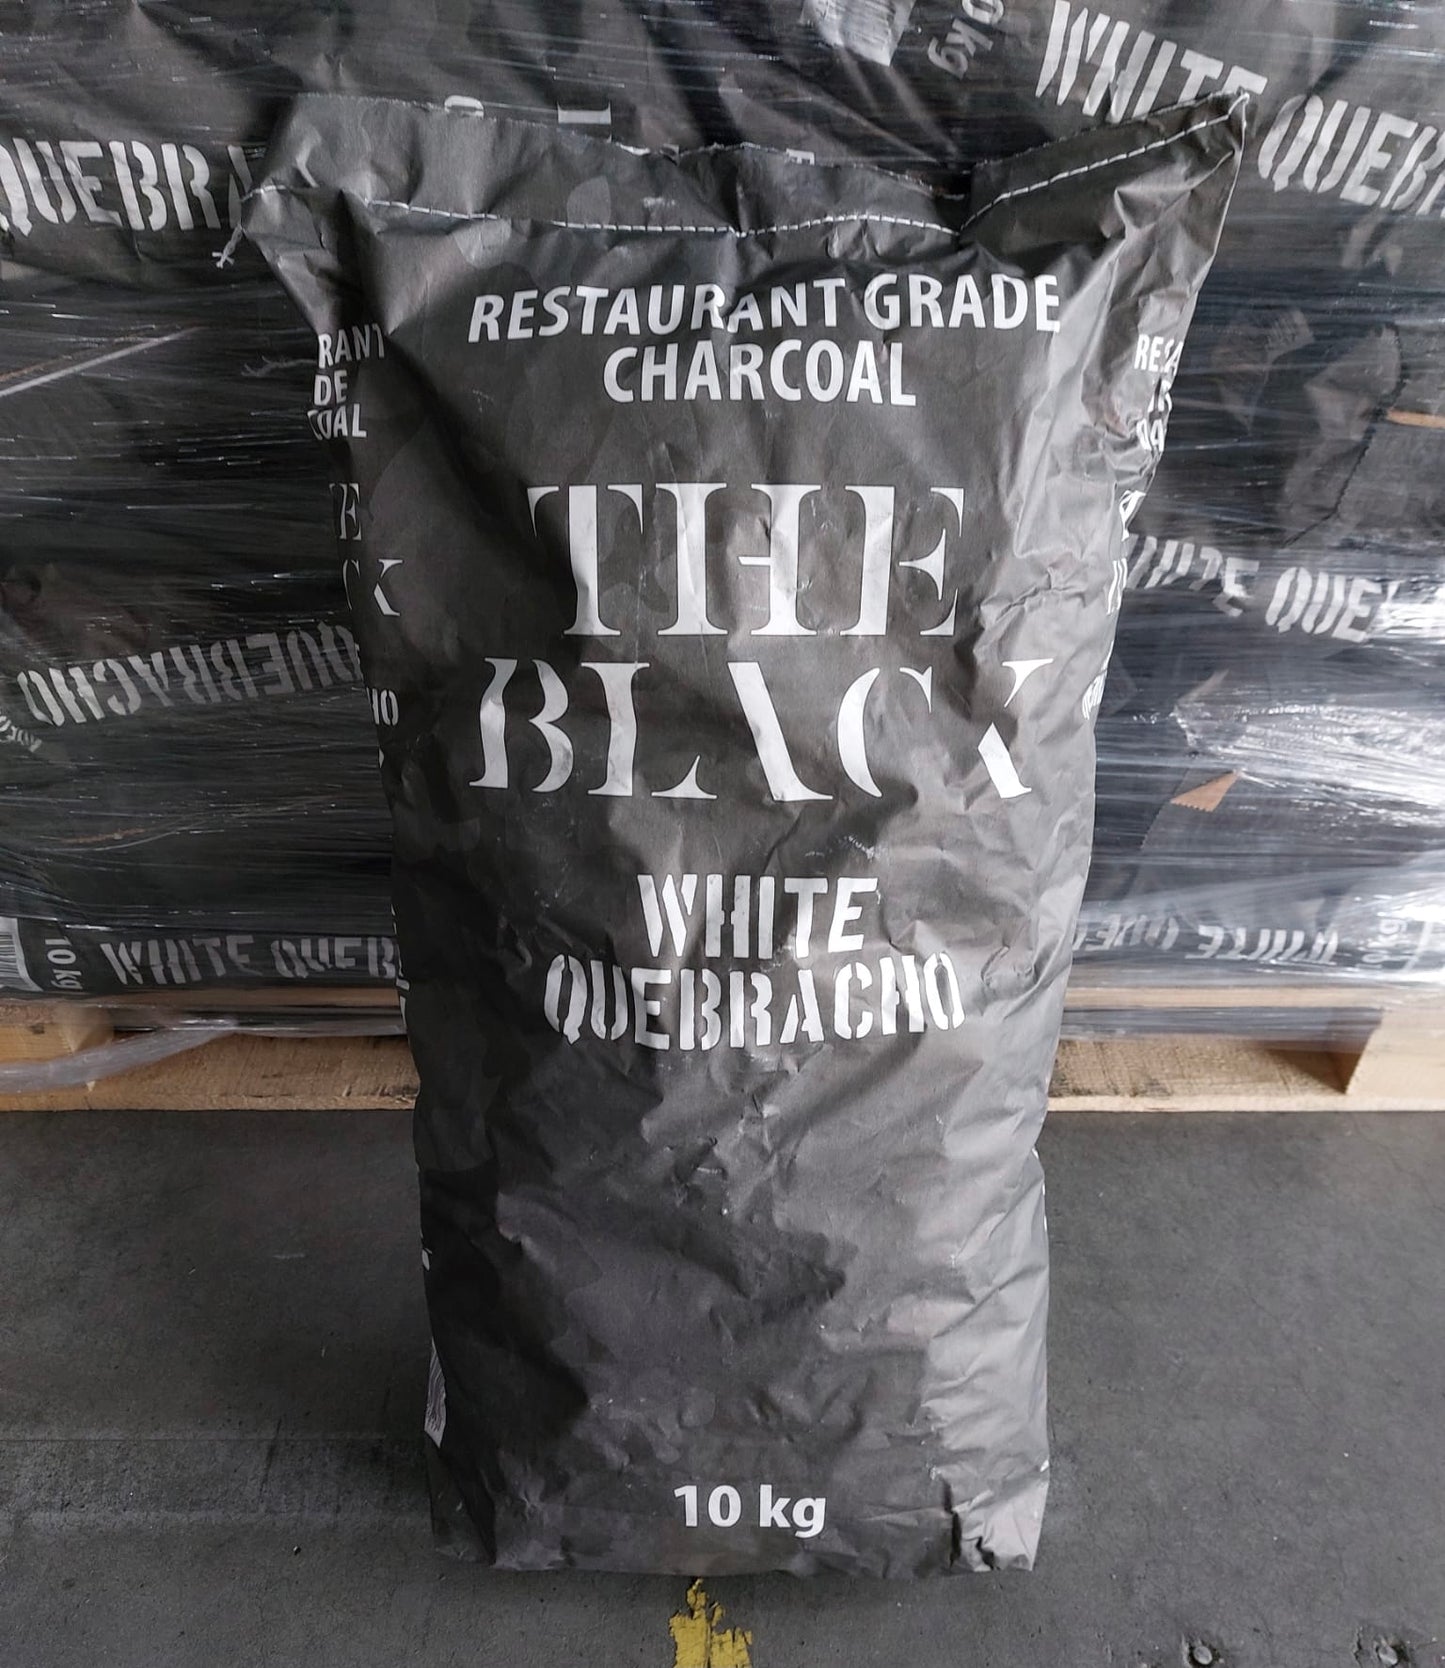 The Black - White Quebracho houtskool - 10 KG